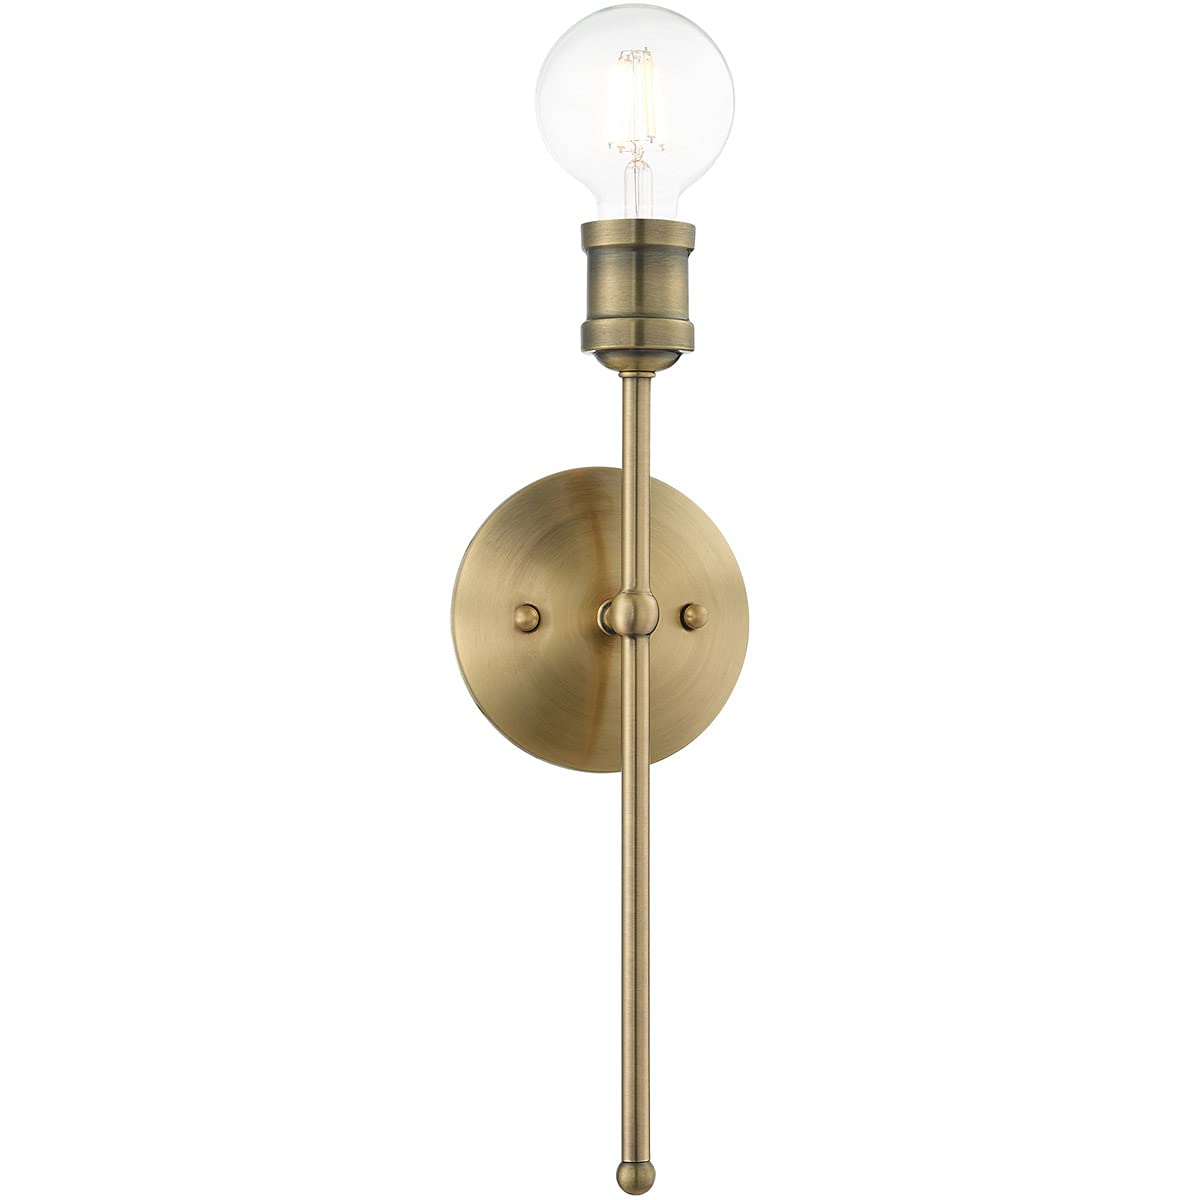 Livex Lighting 16711-01 1 Light Antique Brass Wall Sconce